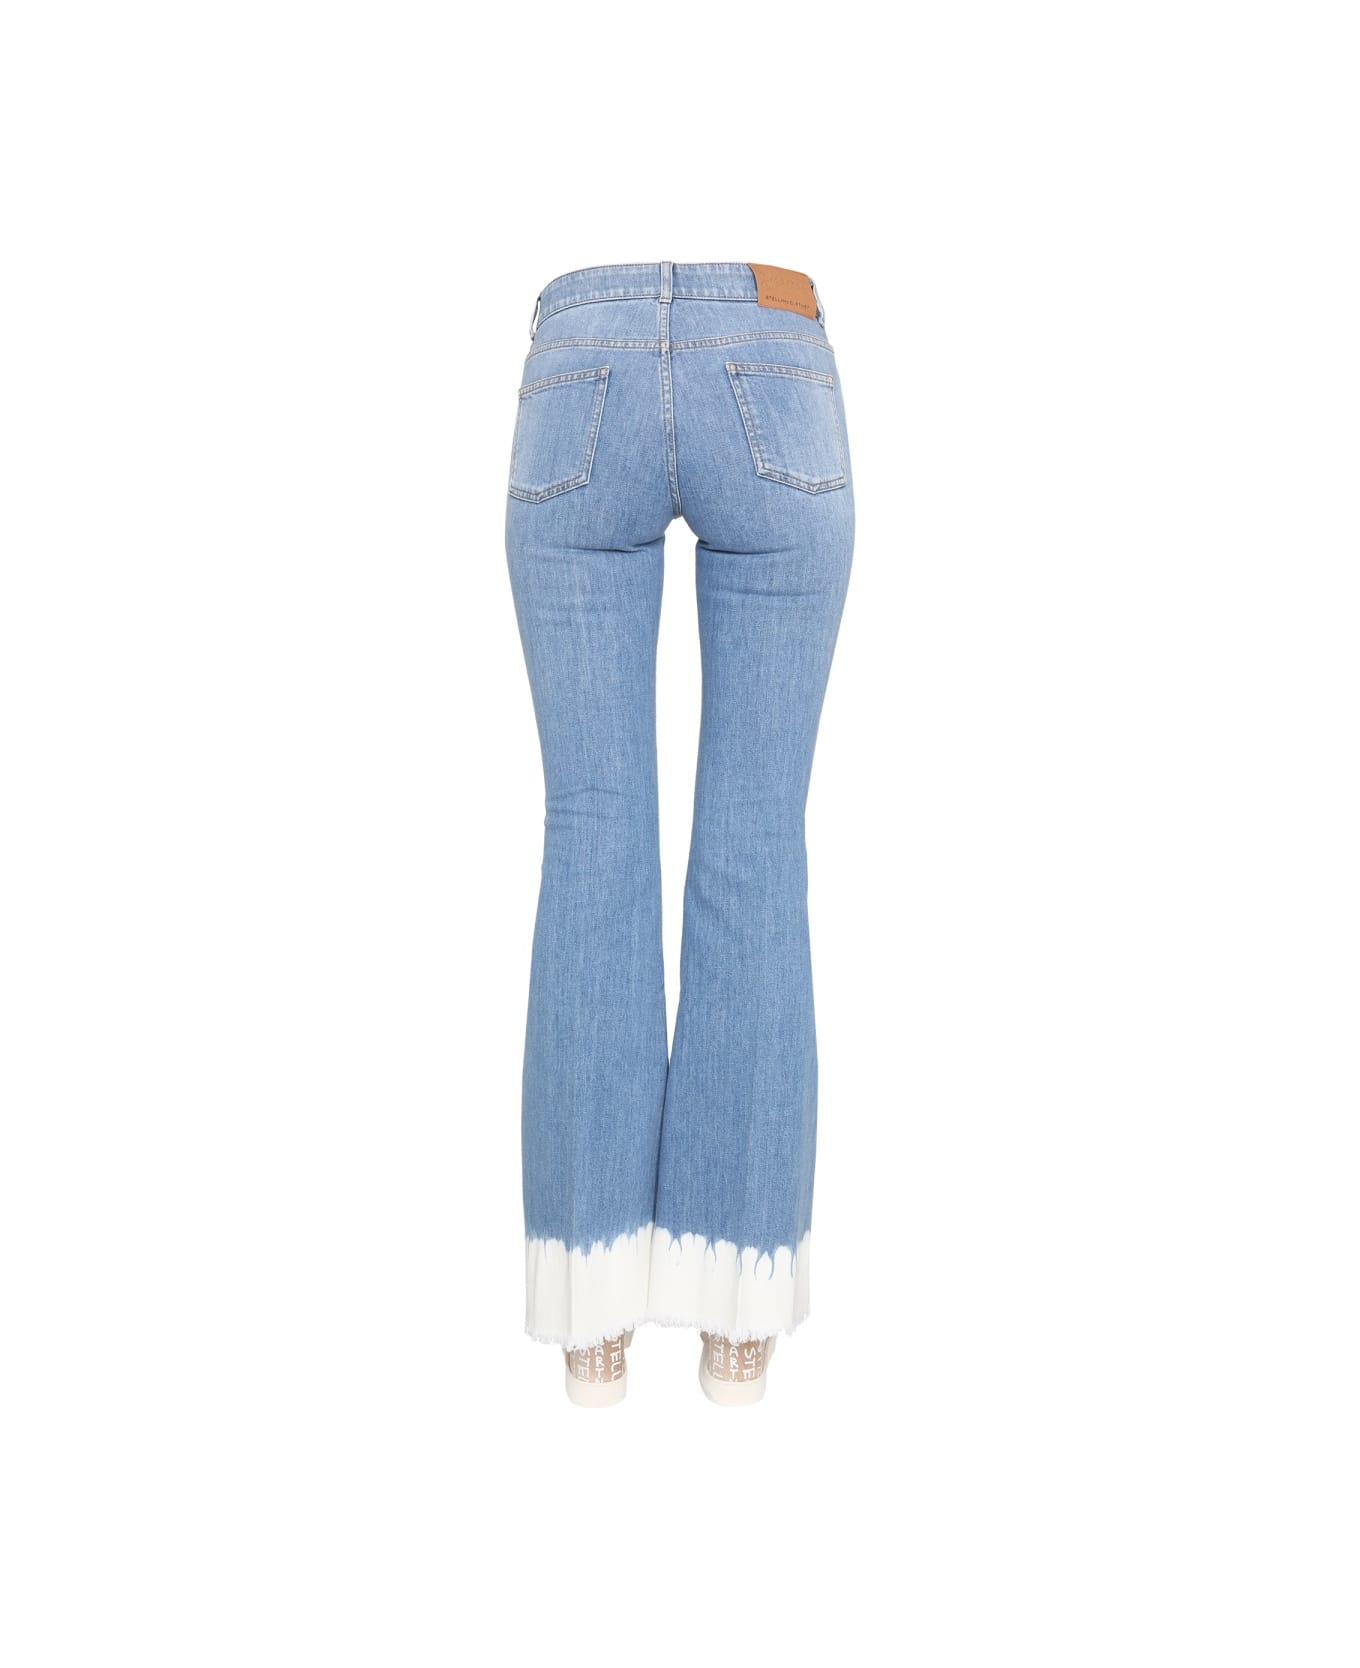 Stella McCartney 1970s Jeans - BLUE デニム